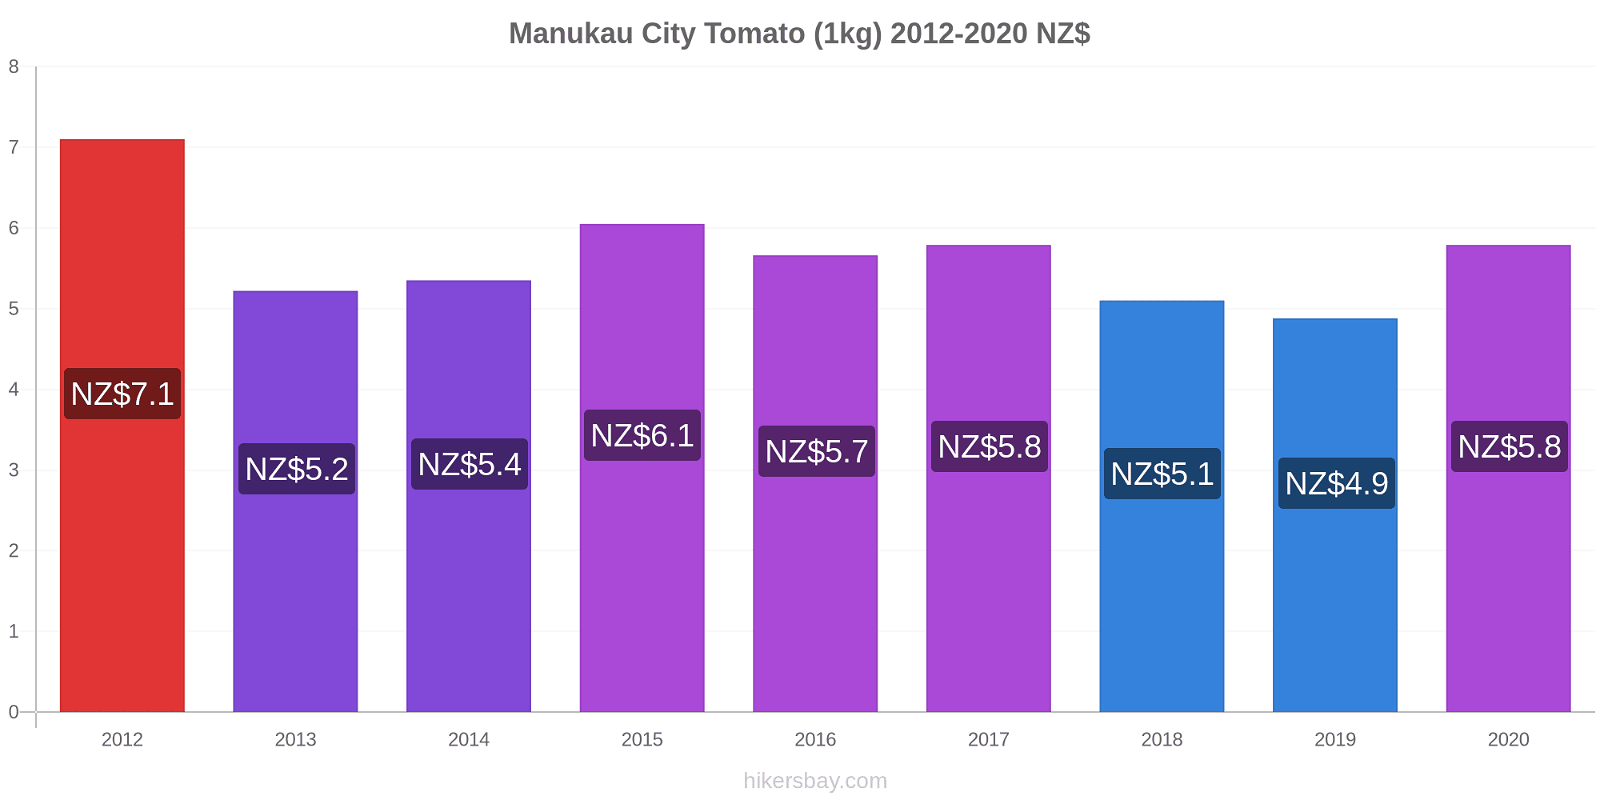 Manukau City price changes Tomato (1kg) hikersbay.com